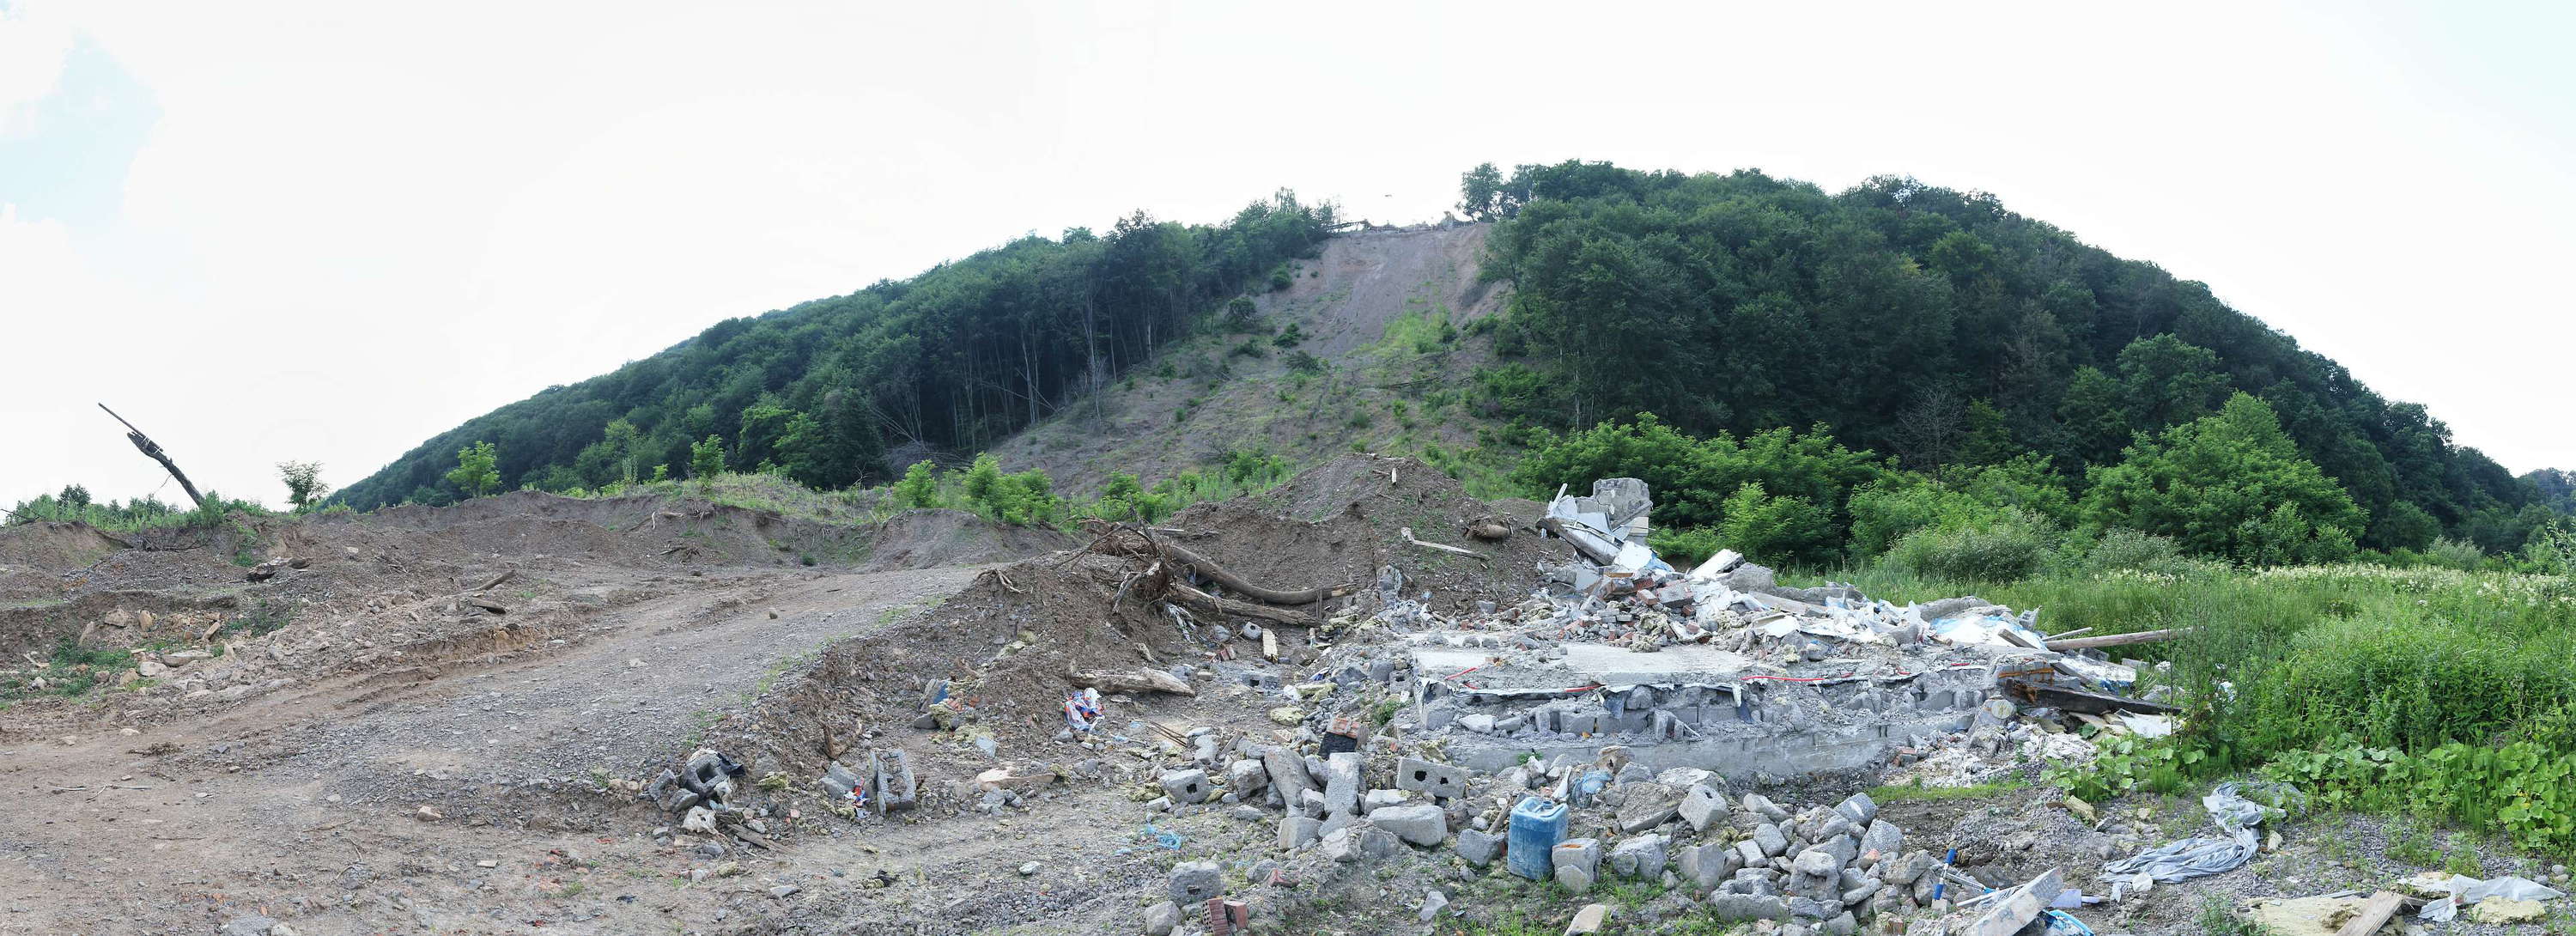 Kolchyno | Landslide with destroyed house